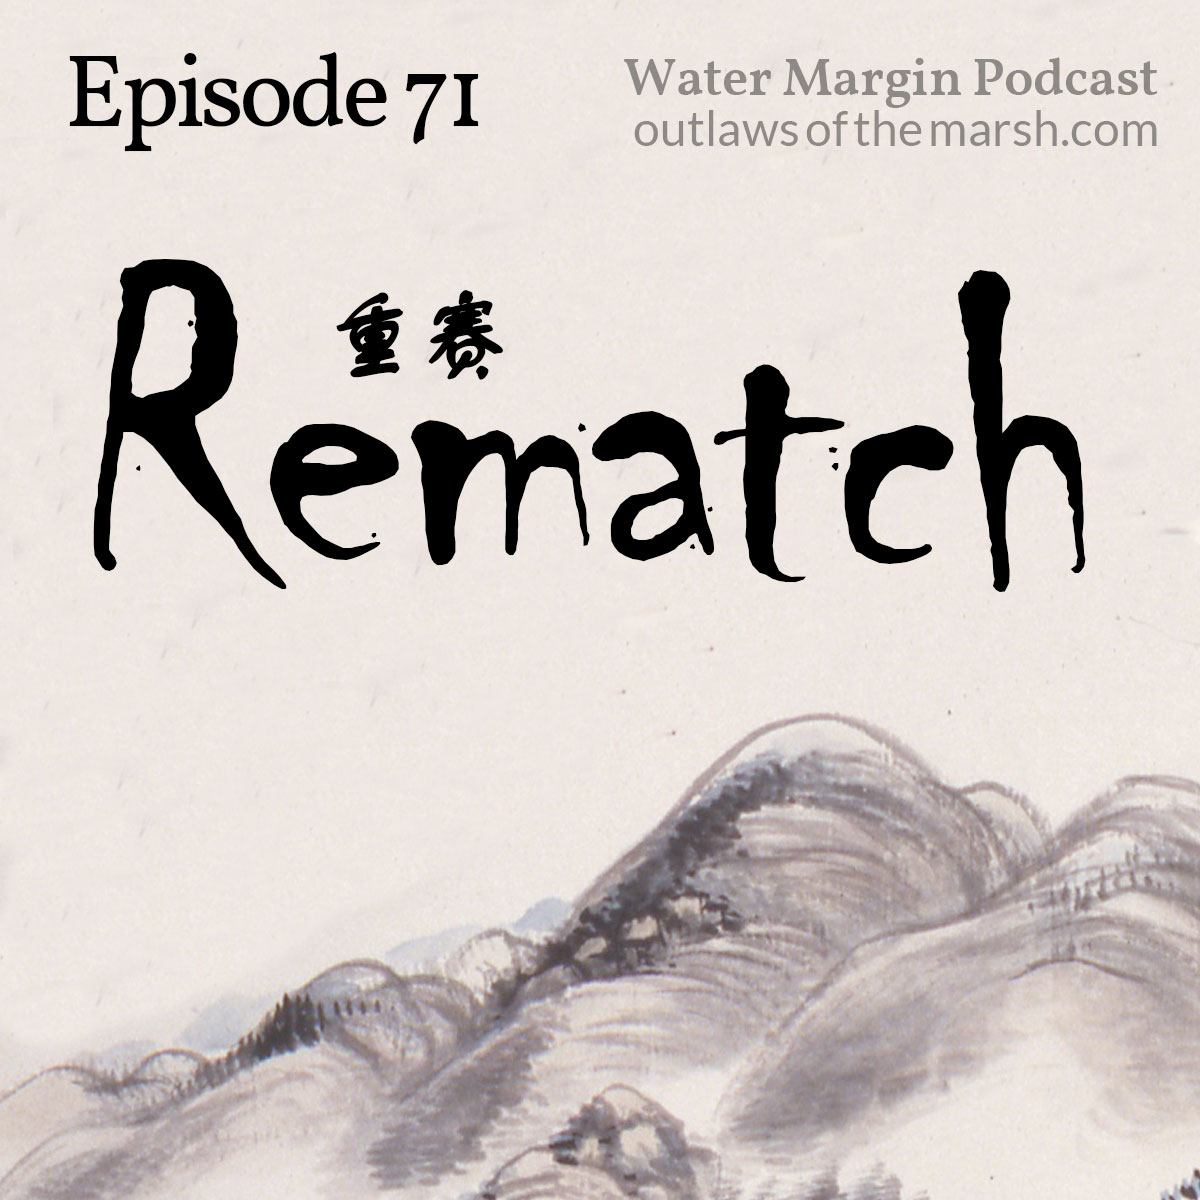 Water Margin Podcast: Episode 071